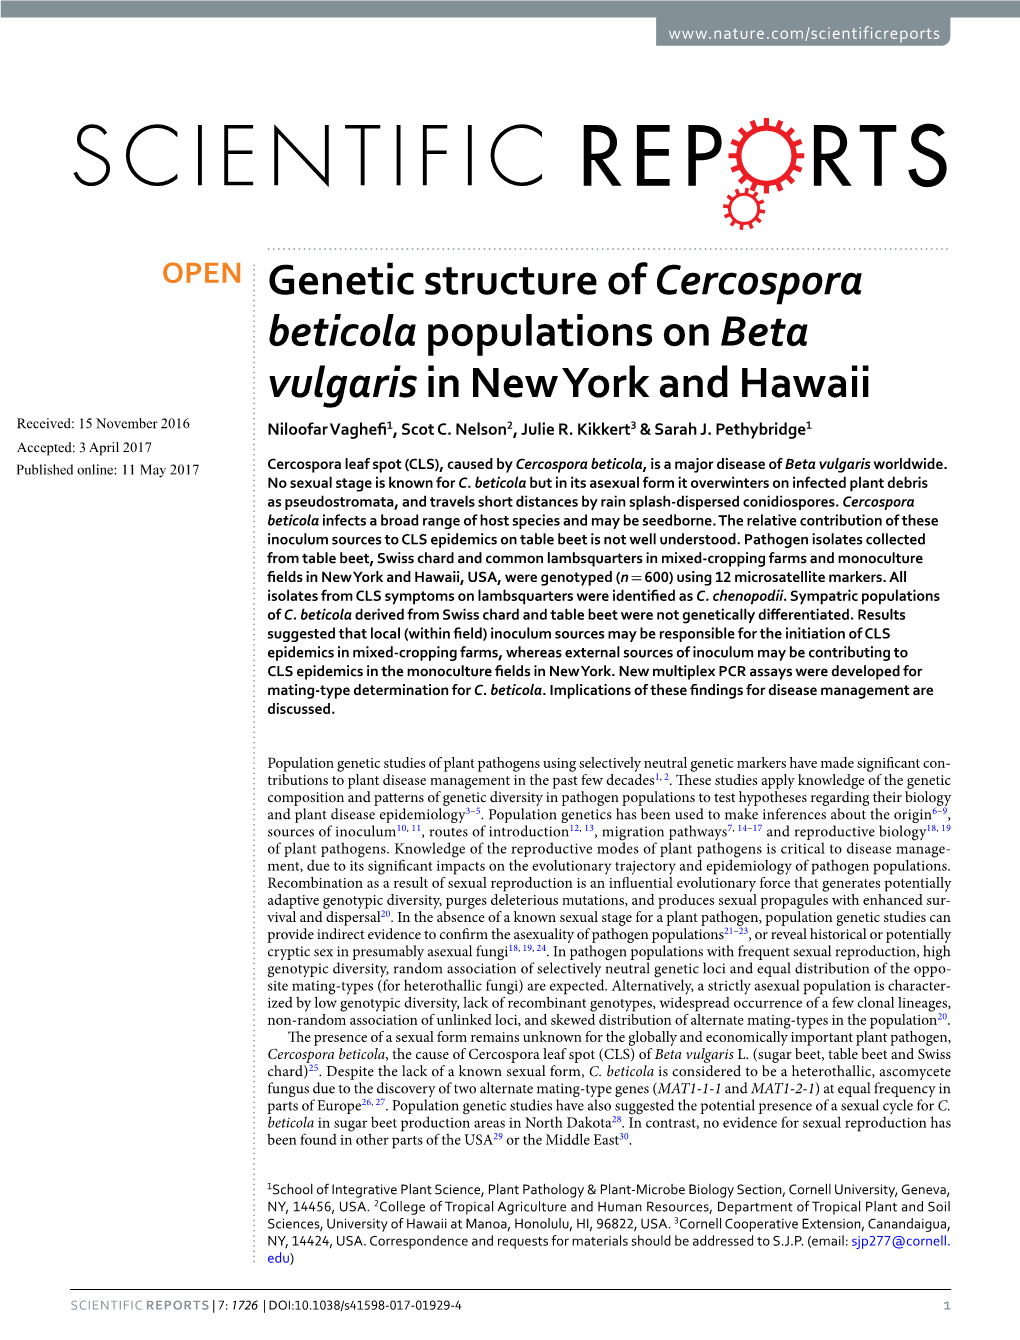 Genetic Structure of Cercospora Beticola Populations on Beta Vulgaris in New York and Hawaii Received: 15 November 2016 Niloofar Vaghefi1, Scot C